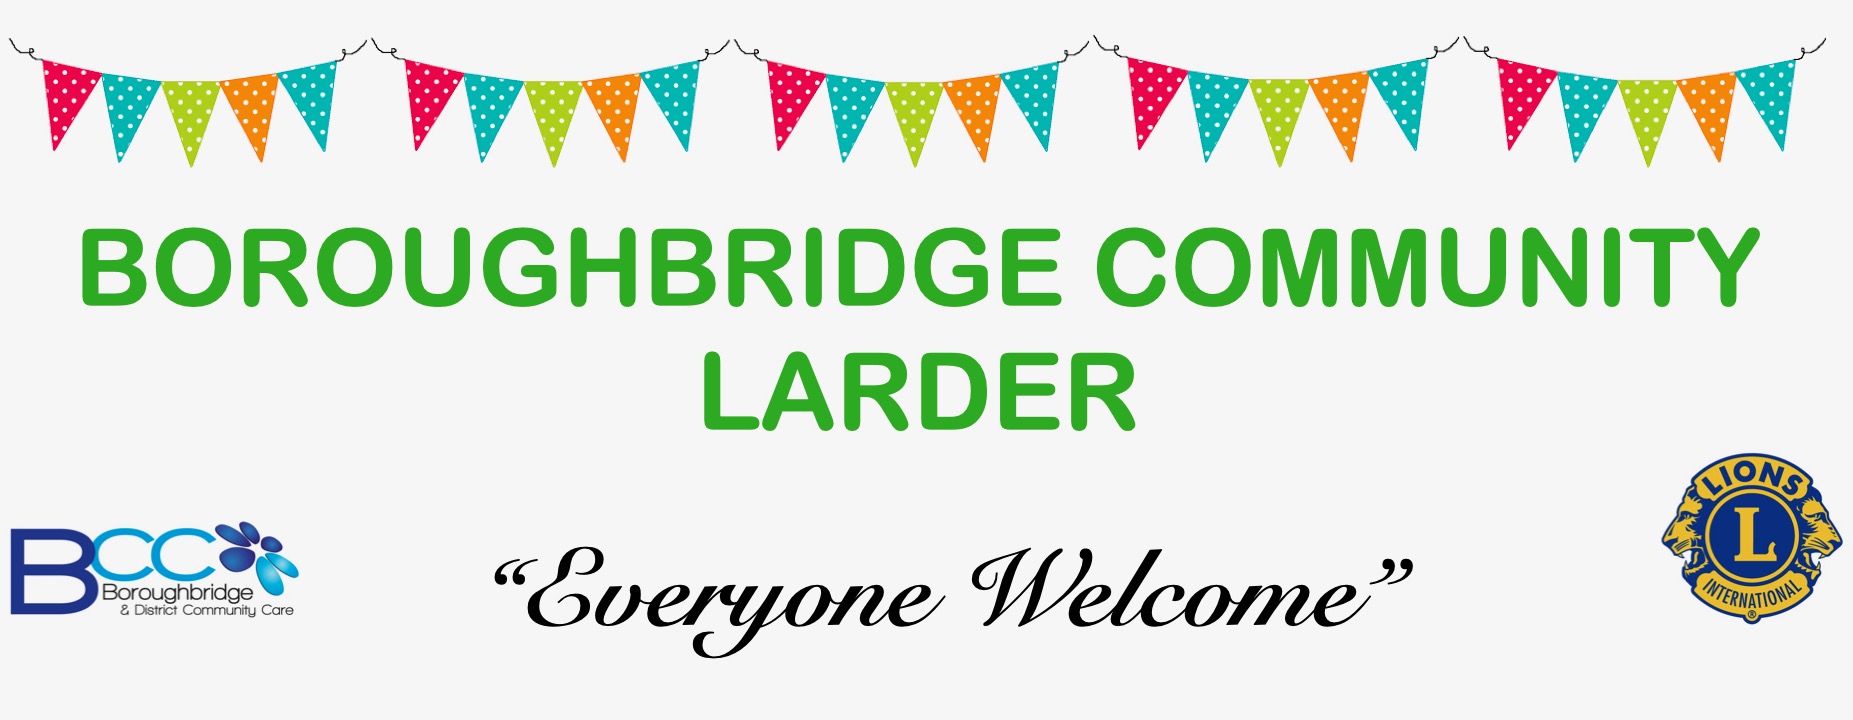 Boroughbridge Community Larder Gallery